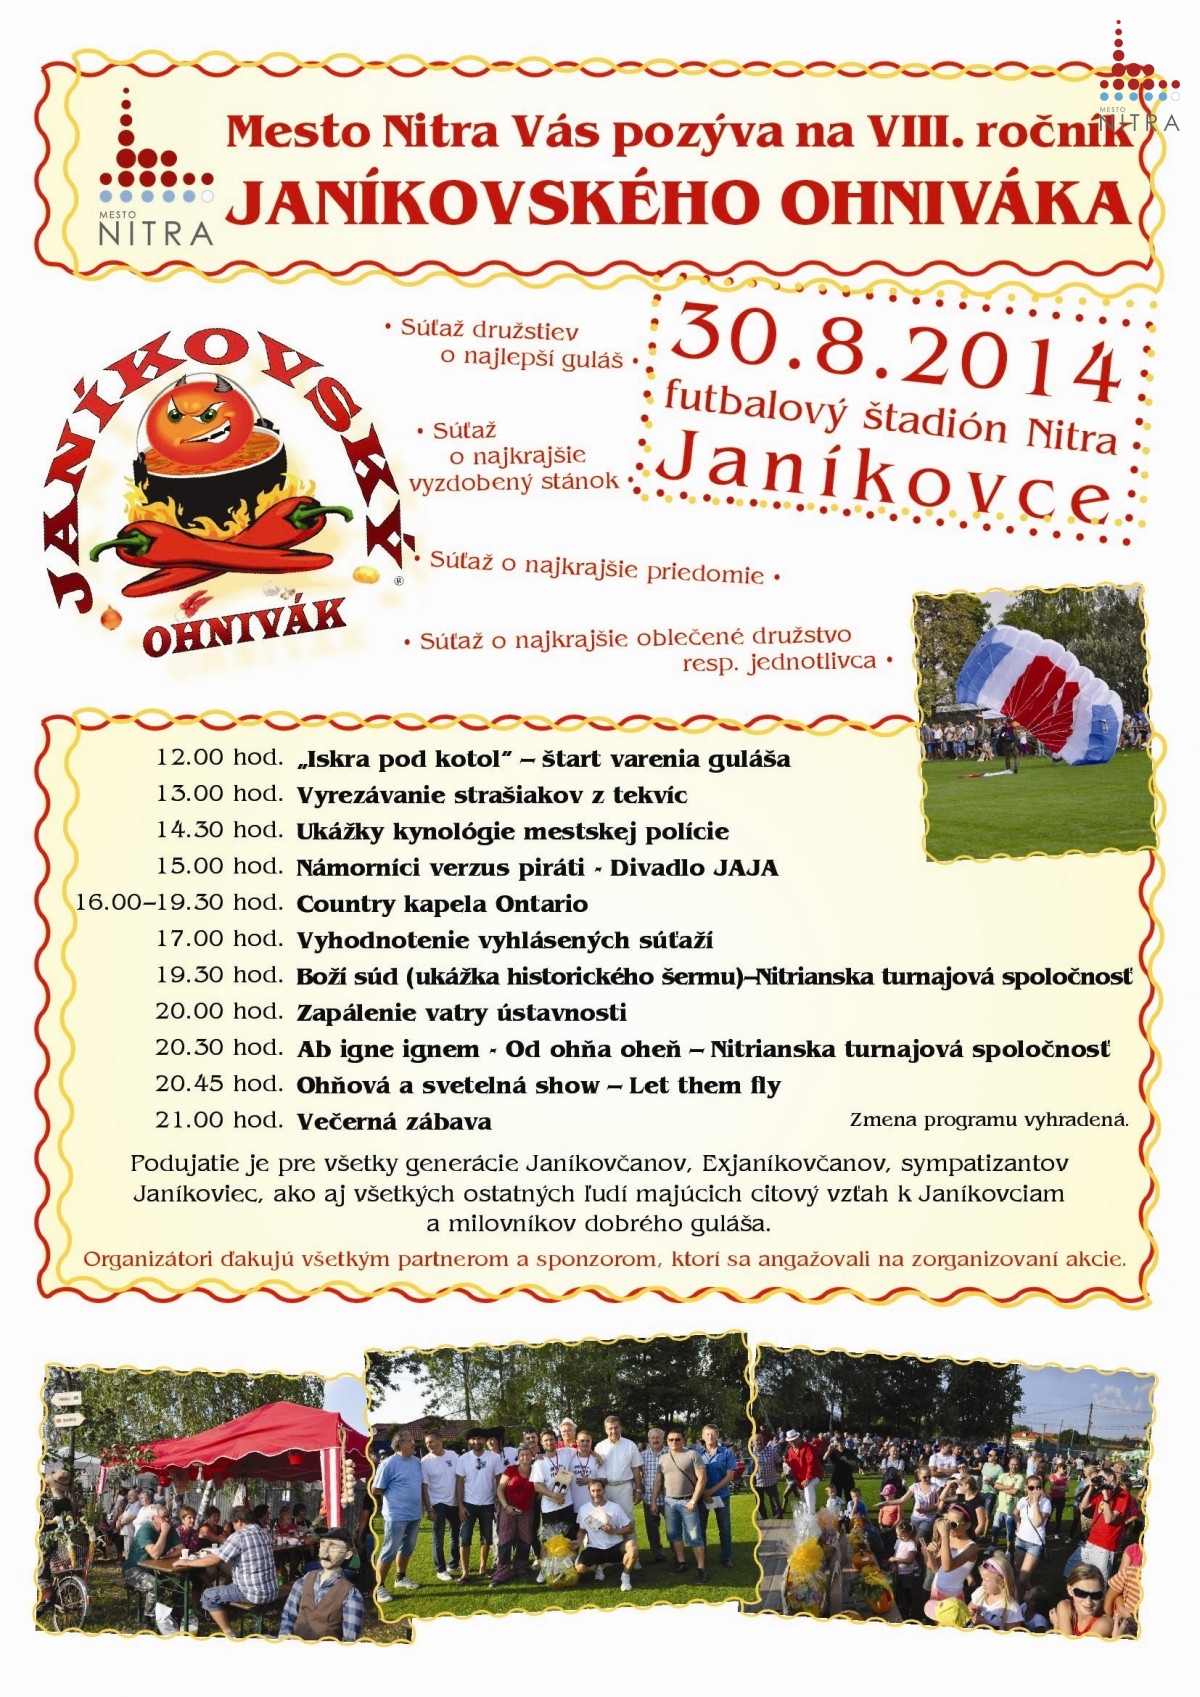 Jankovsk ohnivk 2014 - VIII. ronk